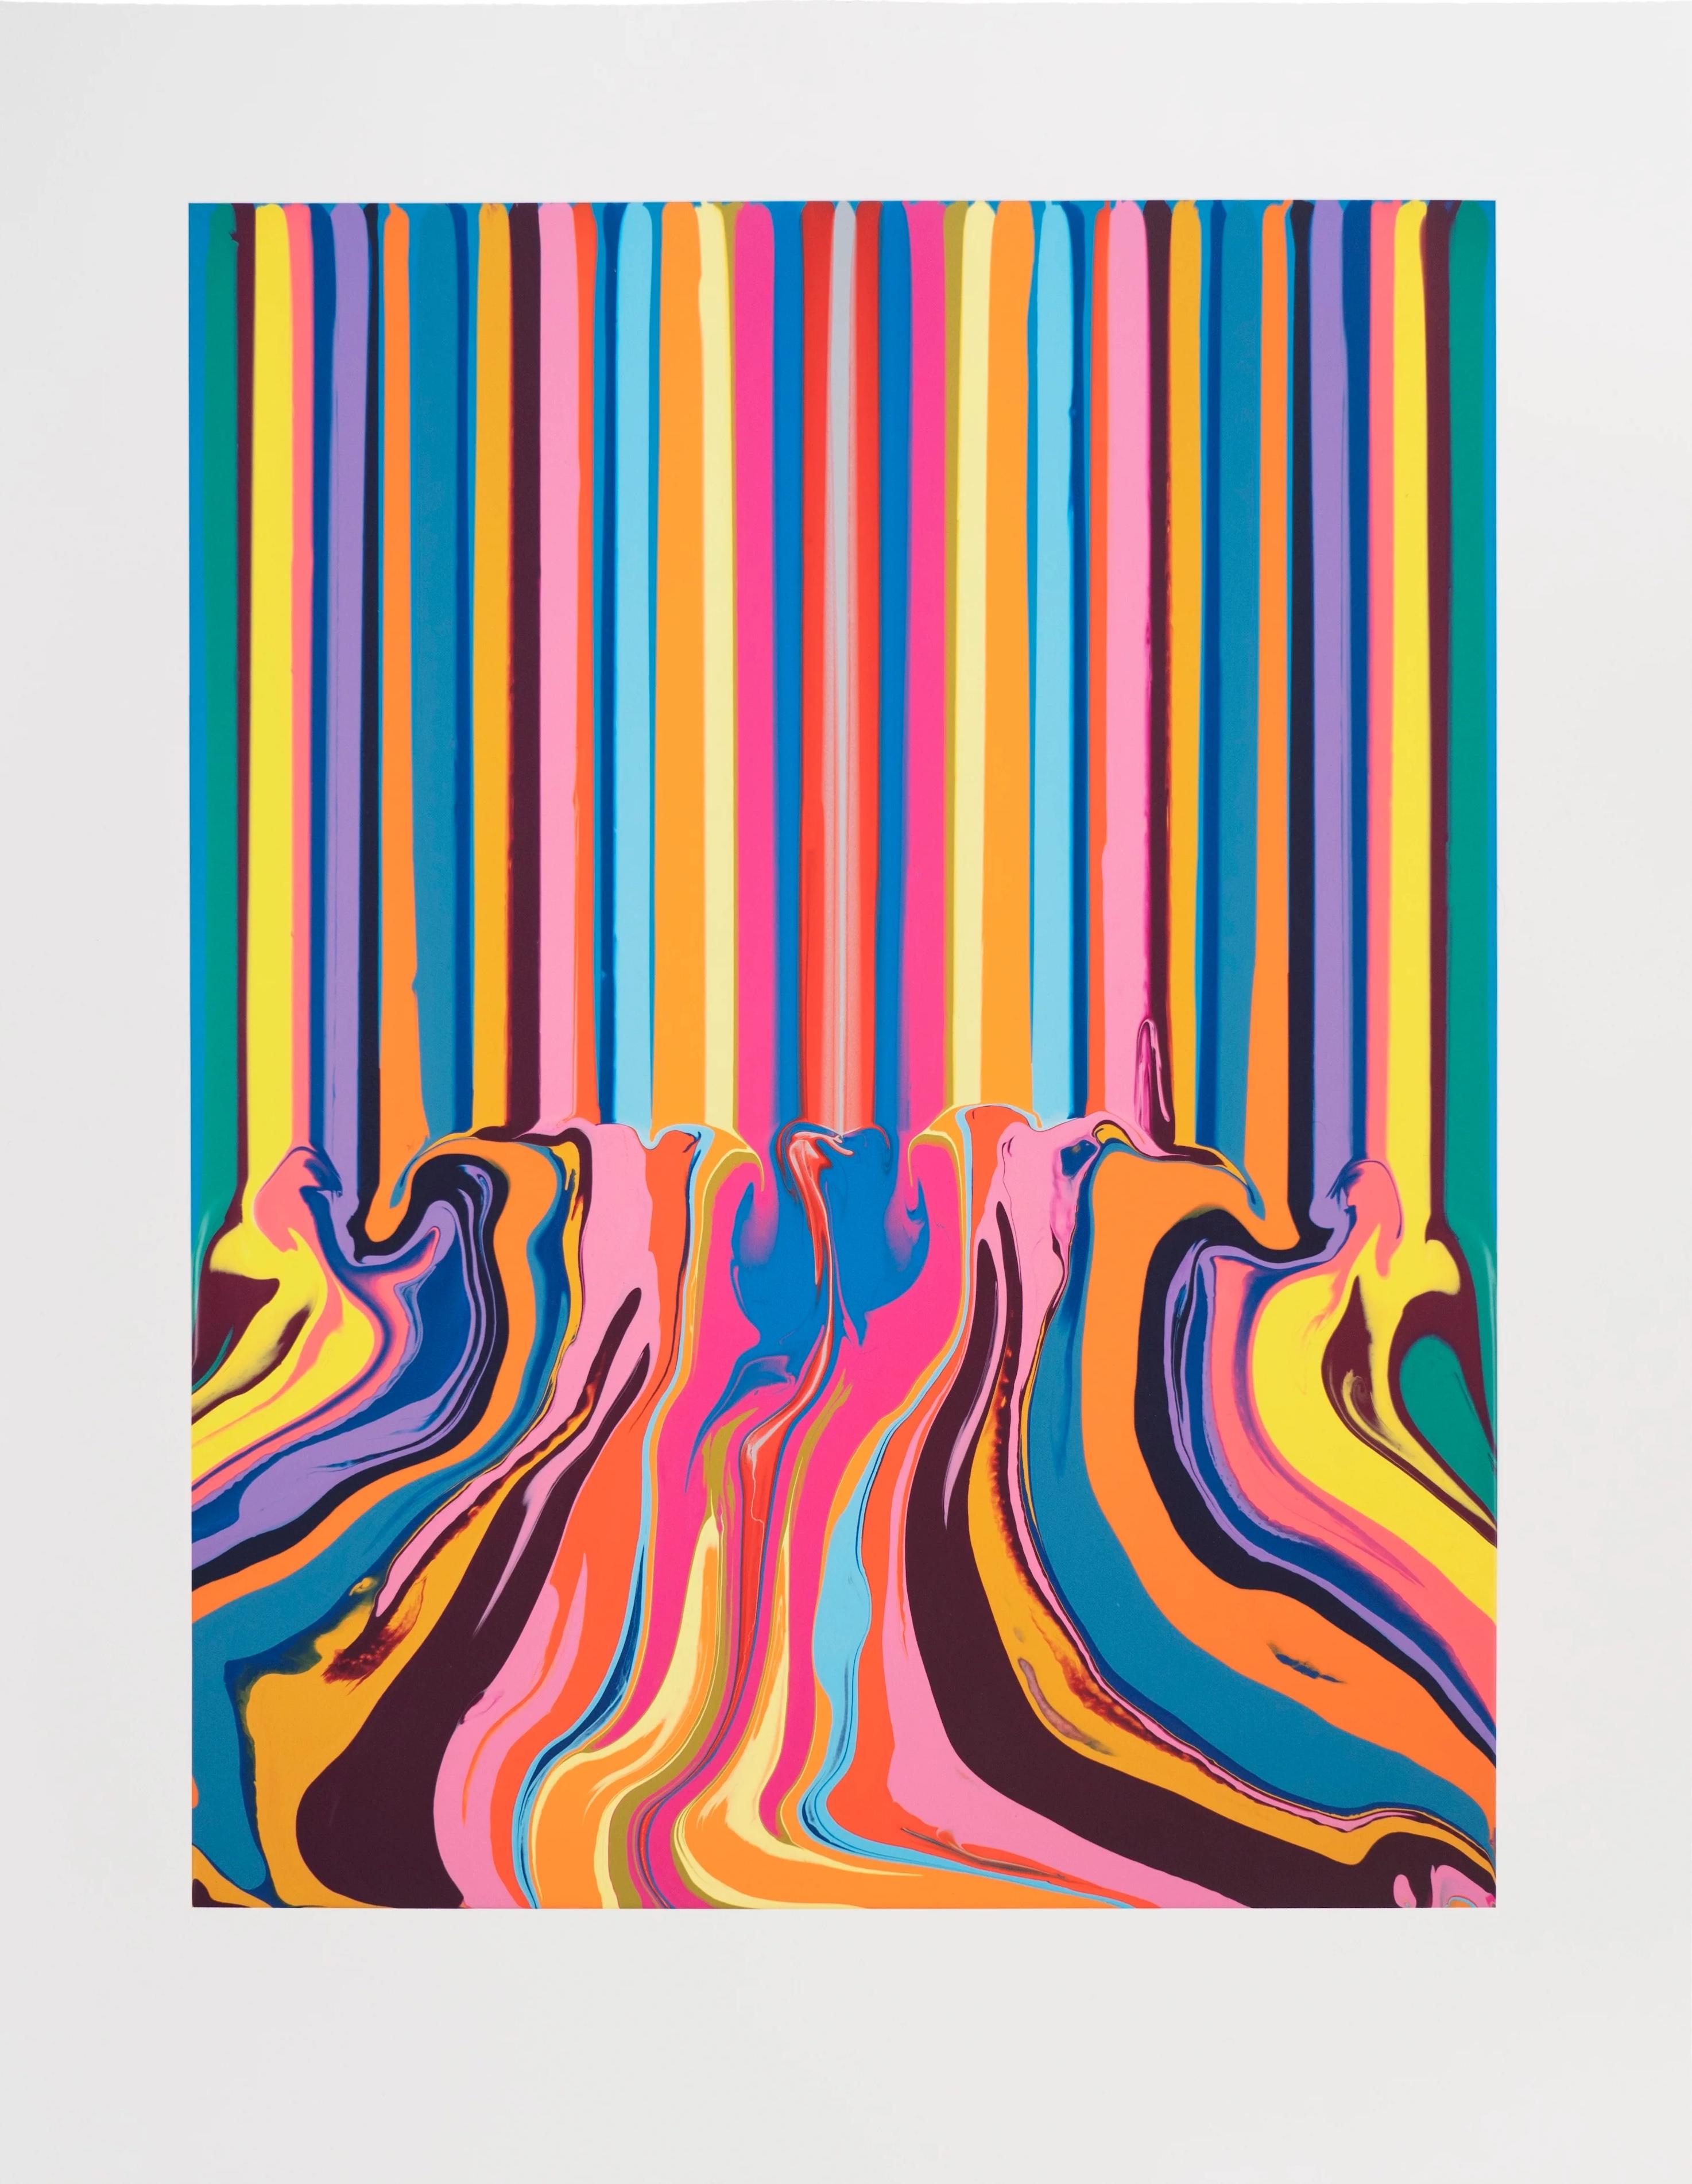 Uplift -- Archival Inkjet Print, Coloured Lines, Colourful Art by Ian Davenport